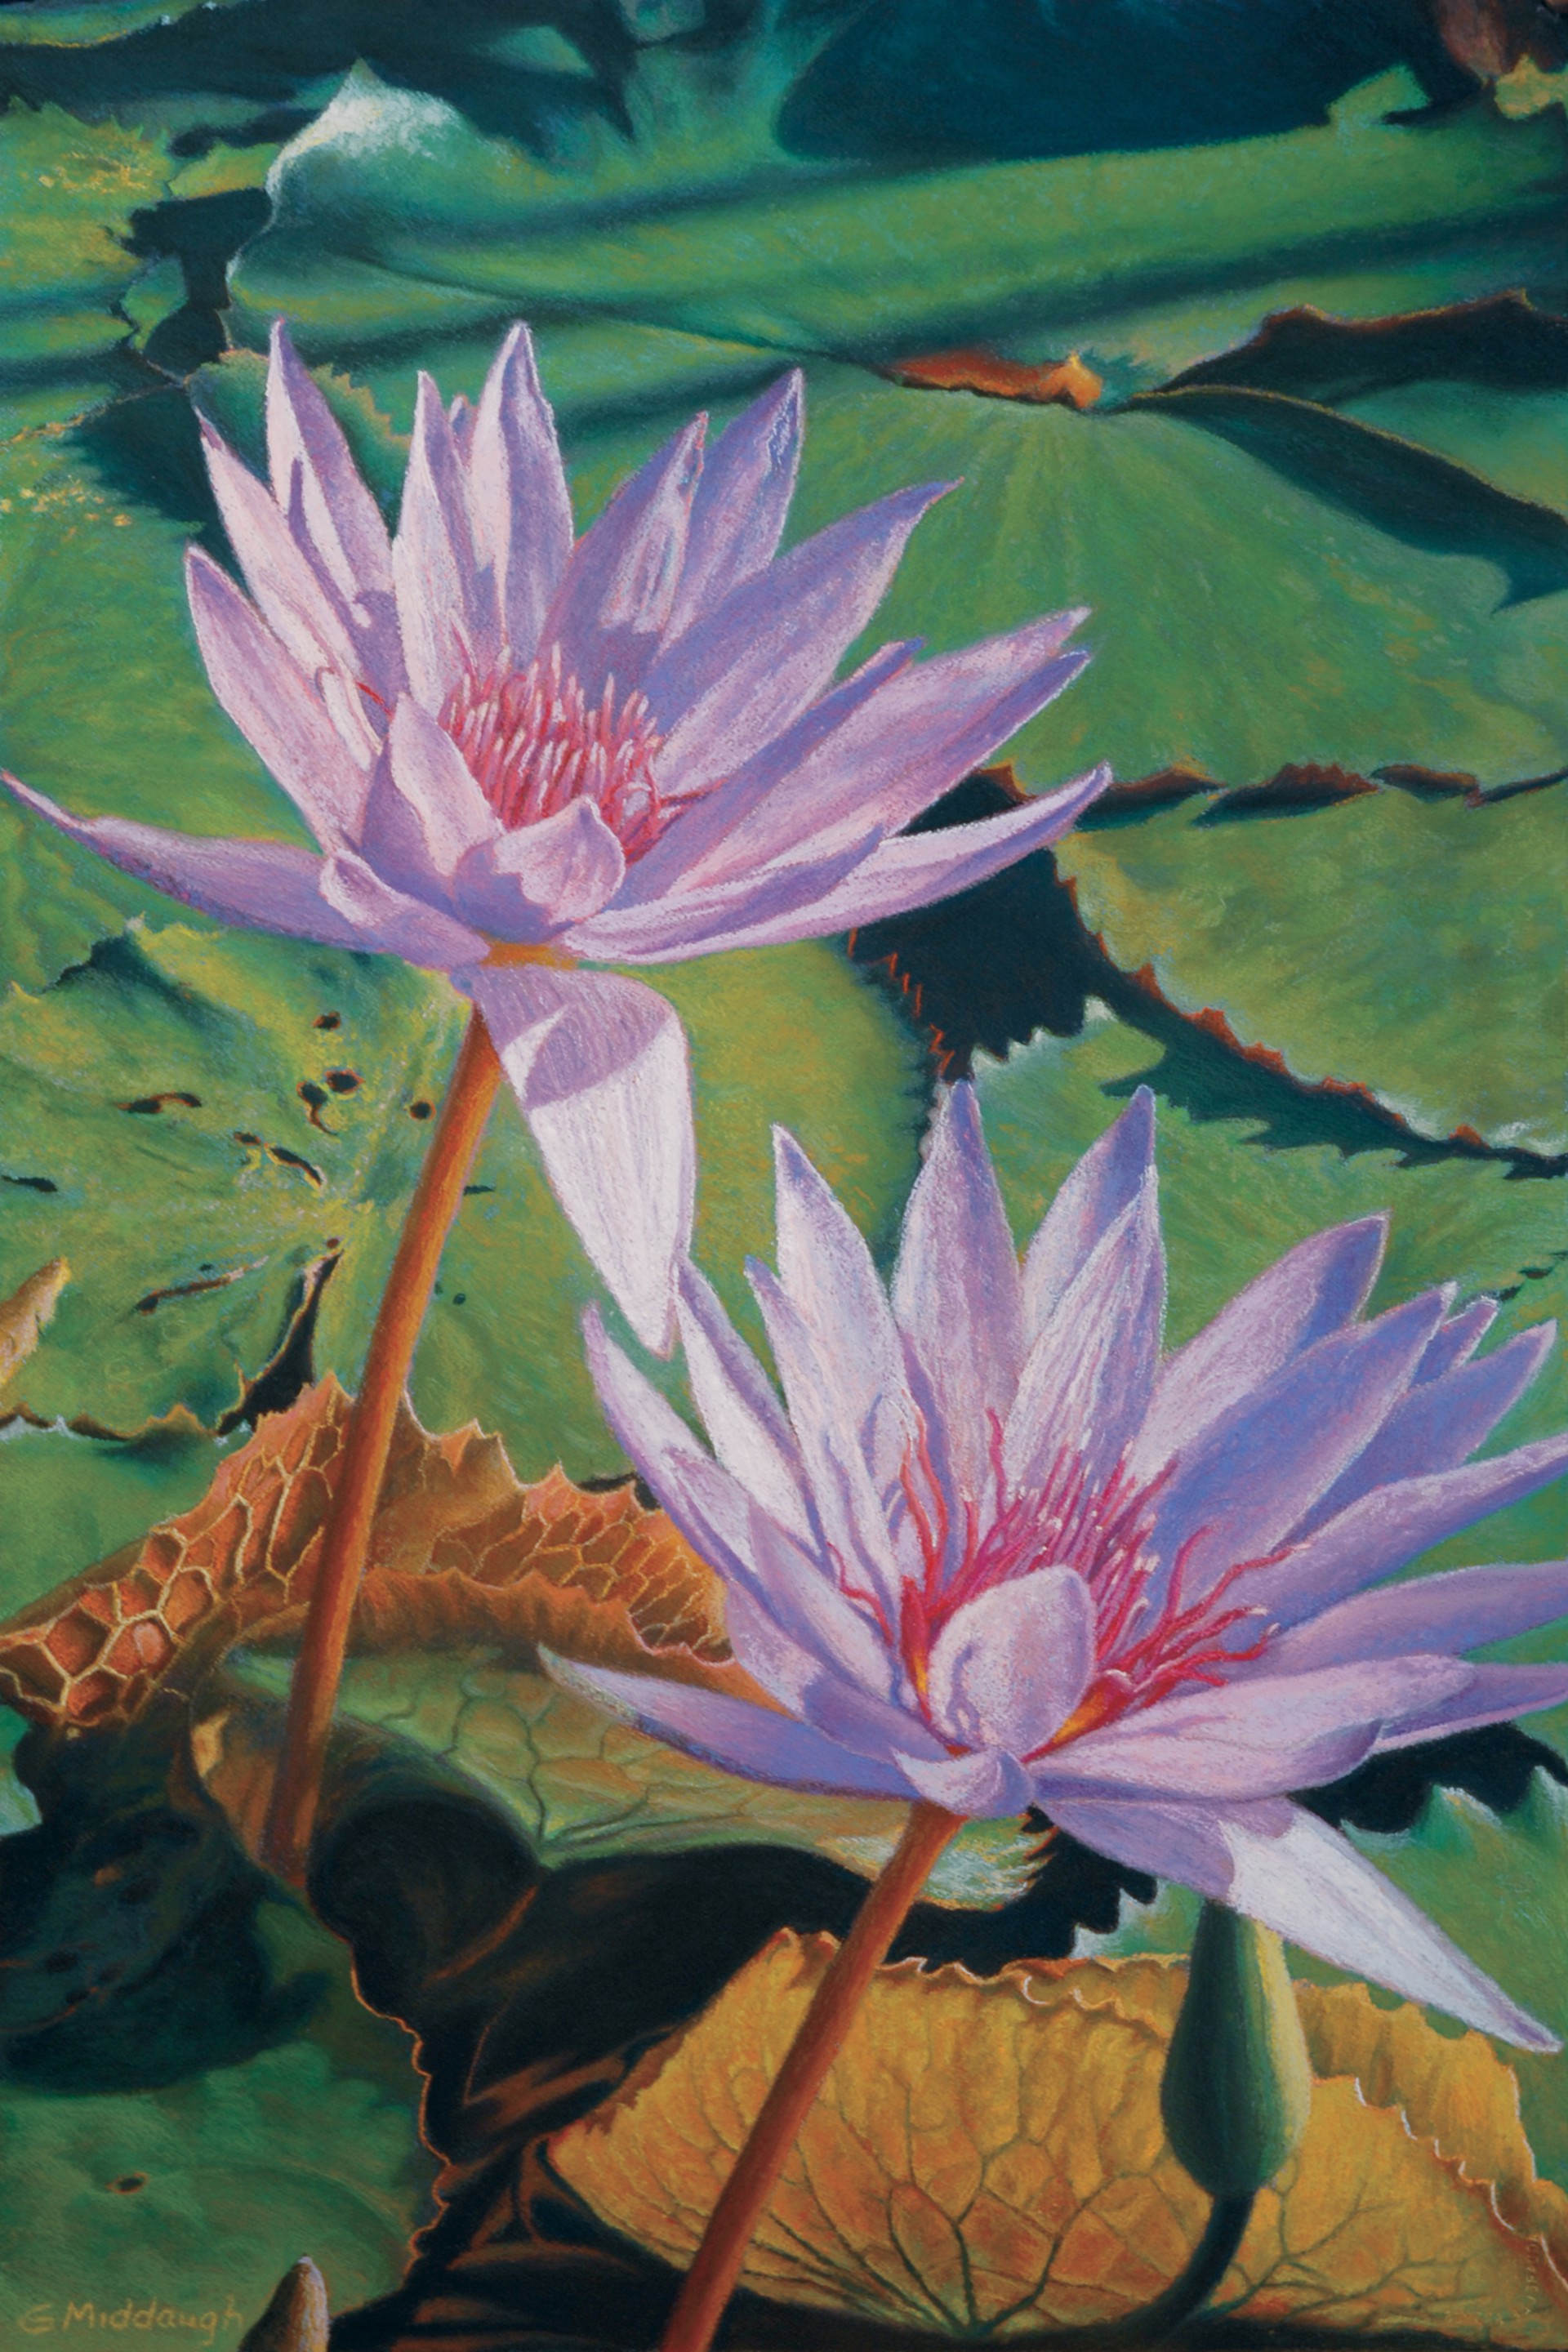 Water Lilies by Garrett Middaugh